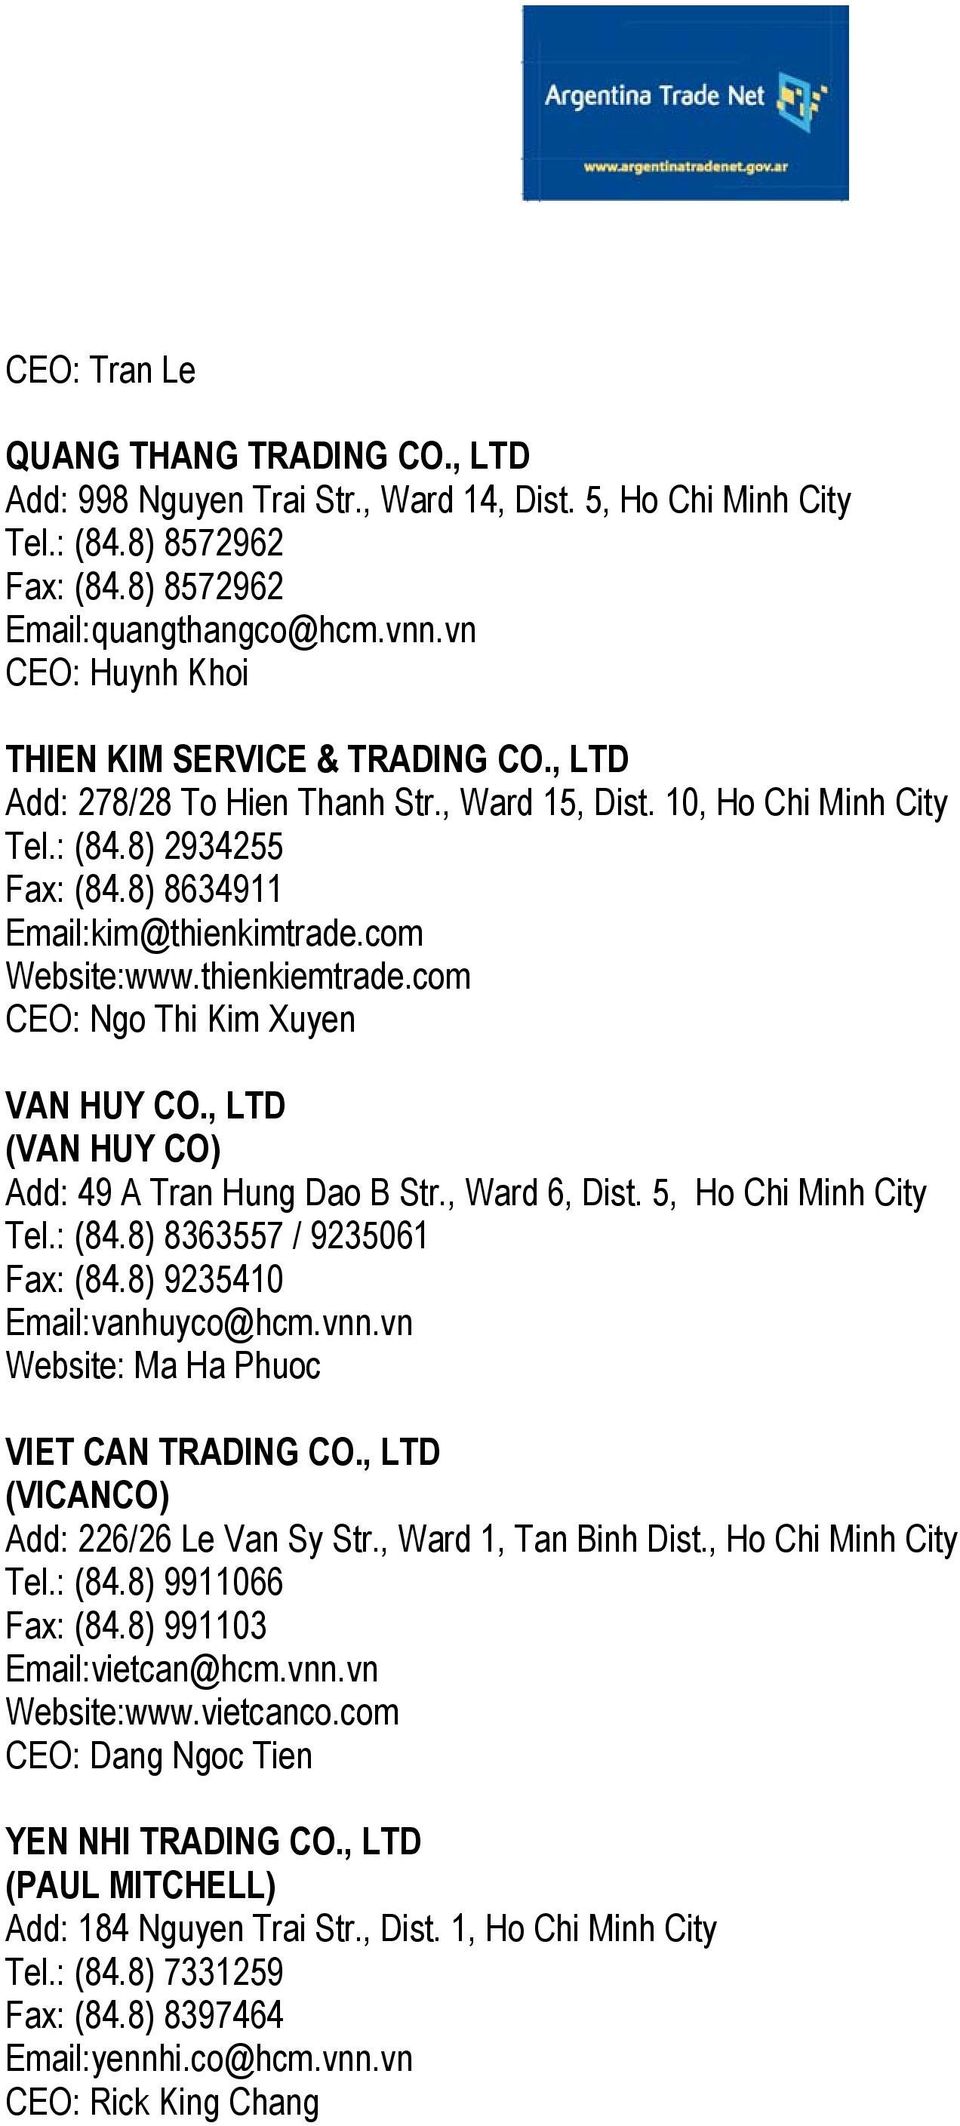 com Website:www.thienkiemtrade.com CEO: Ngo Thi Kim Xuyen VAN HUY CO., LTD (VAN HUY CO) Add: 49 A Tran Hung Dao B Str., Ward 6, Dist. 5, Ho Chi Minh City Tel.: (84.8) 8363557 / 9235061 Fax: (84.